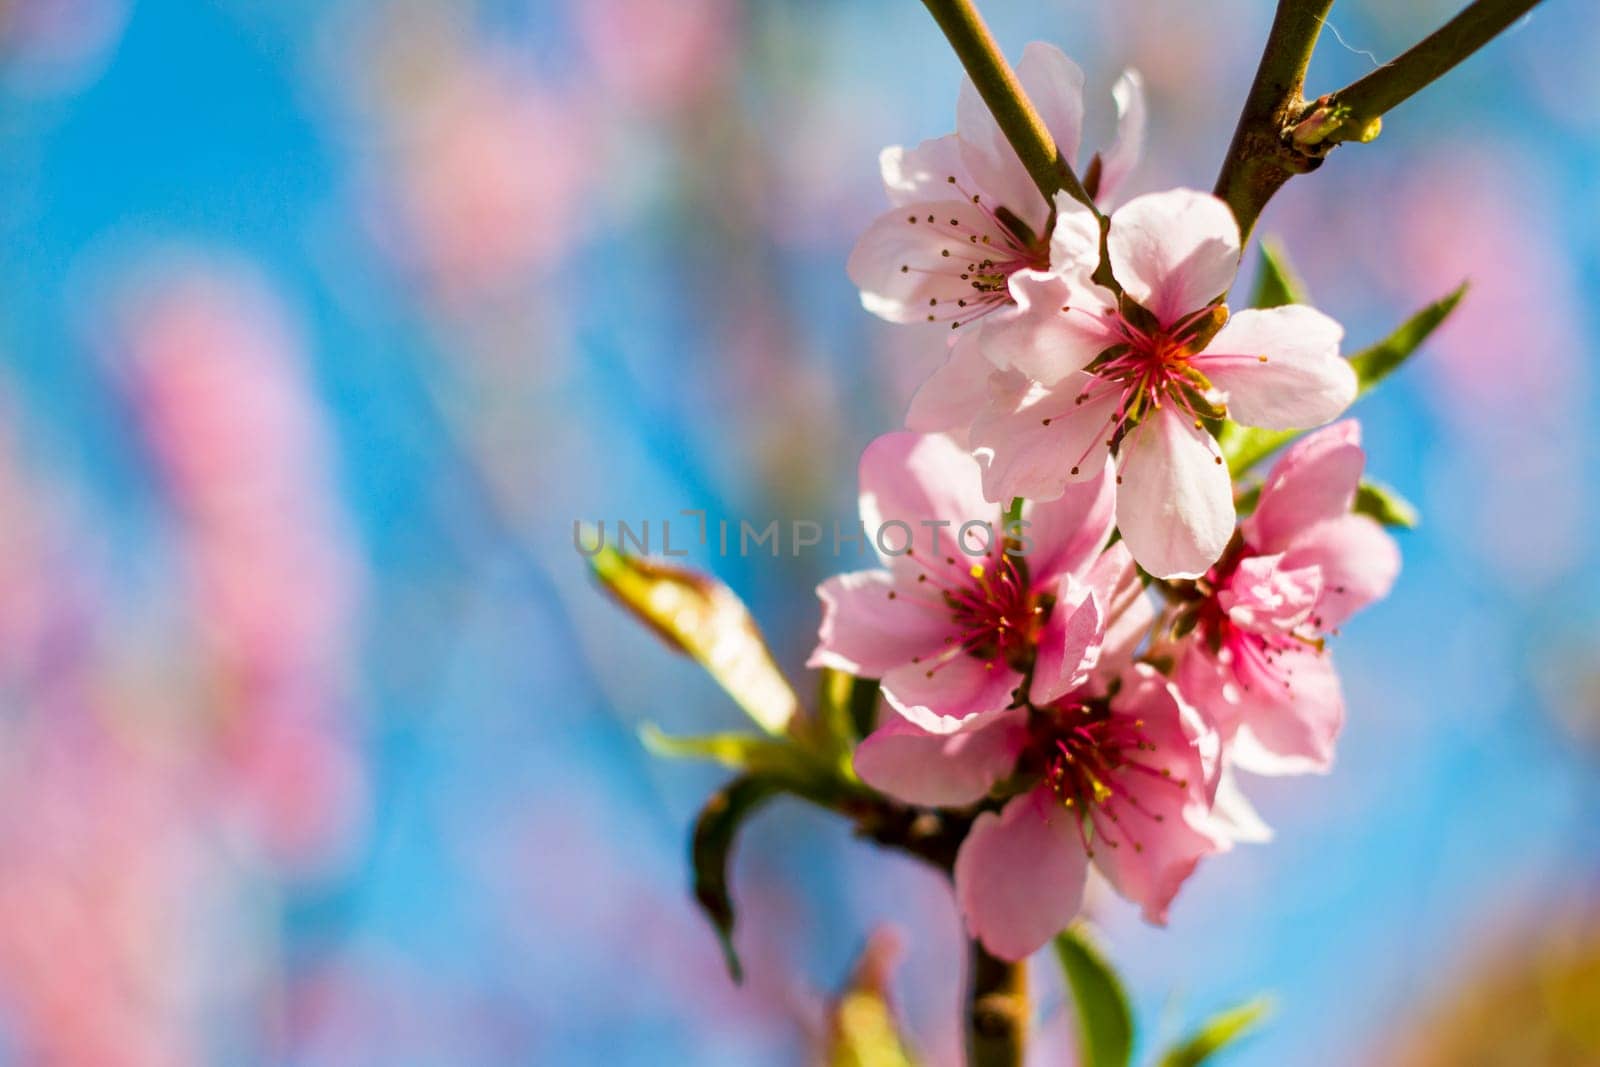 Nectarine peach blossom flowers on spring tree. Agriculture beautiful season farming springtime landscape